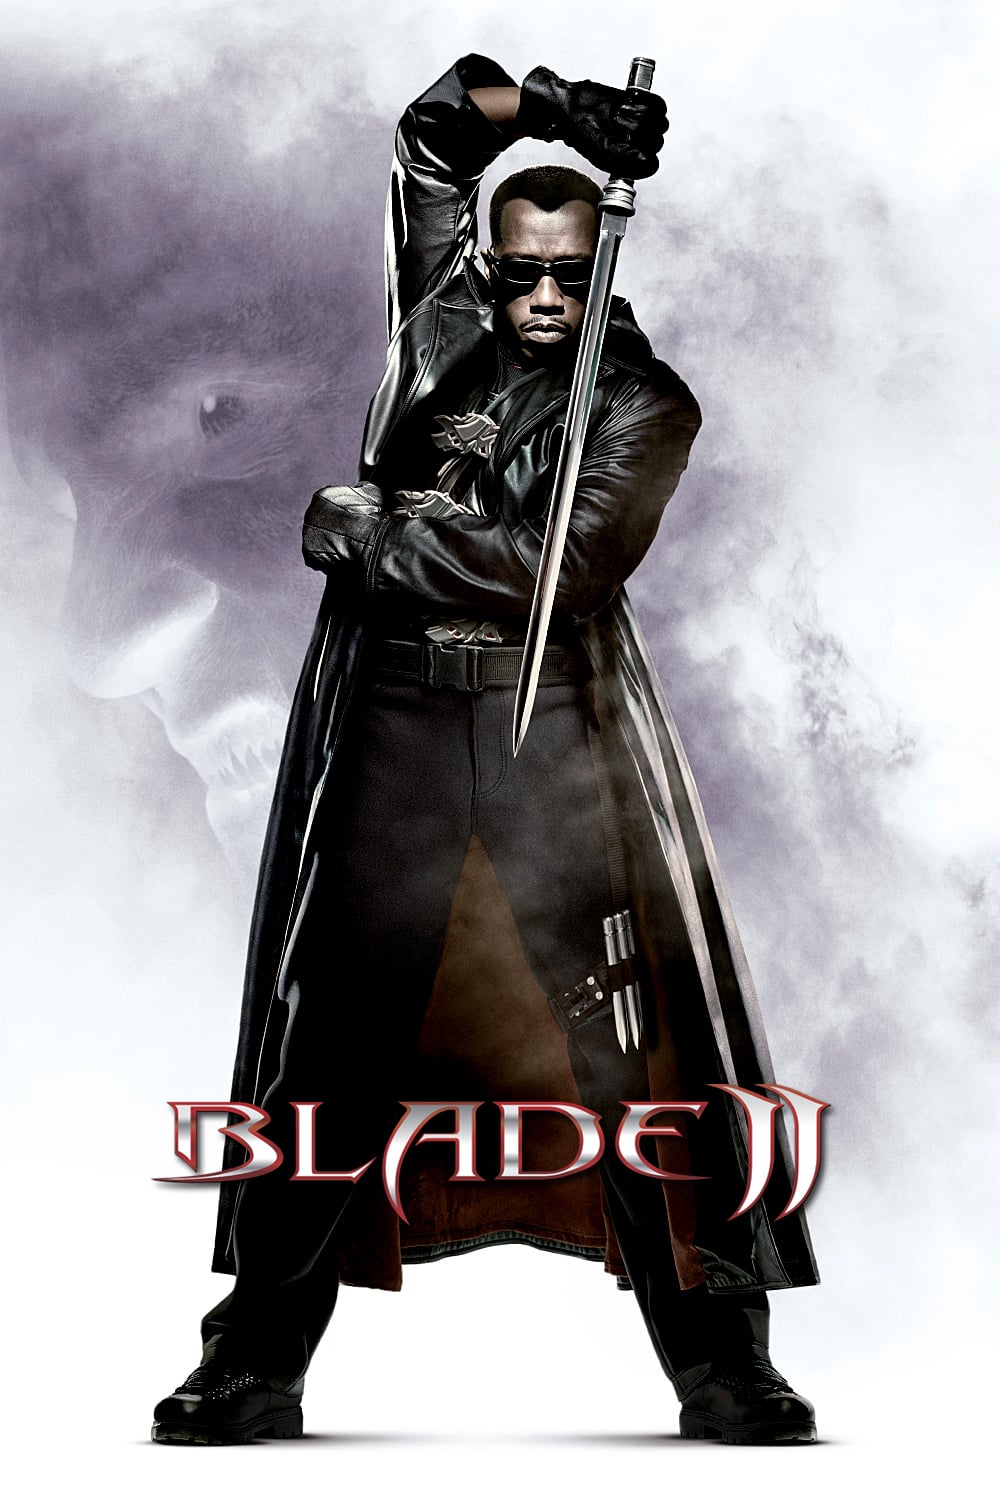 Blade 2 (2002) Dual Audio Hindi-English 480p 720p Bluray Gdrive Link